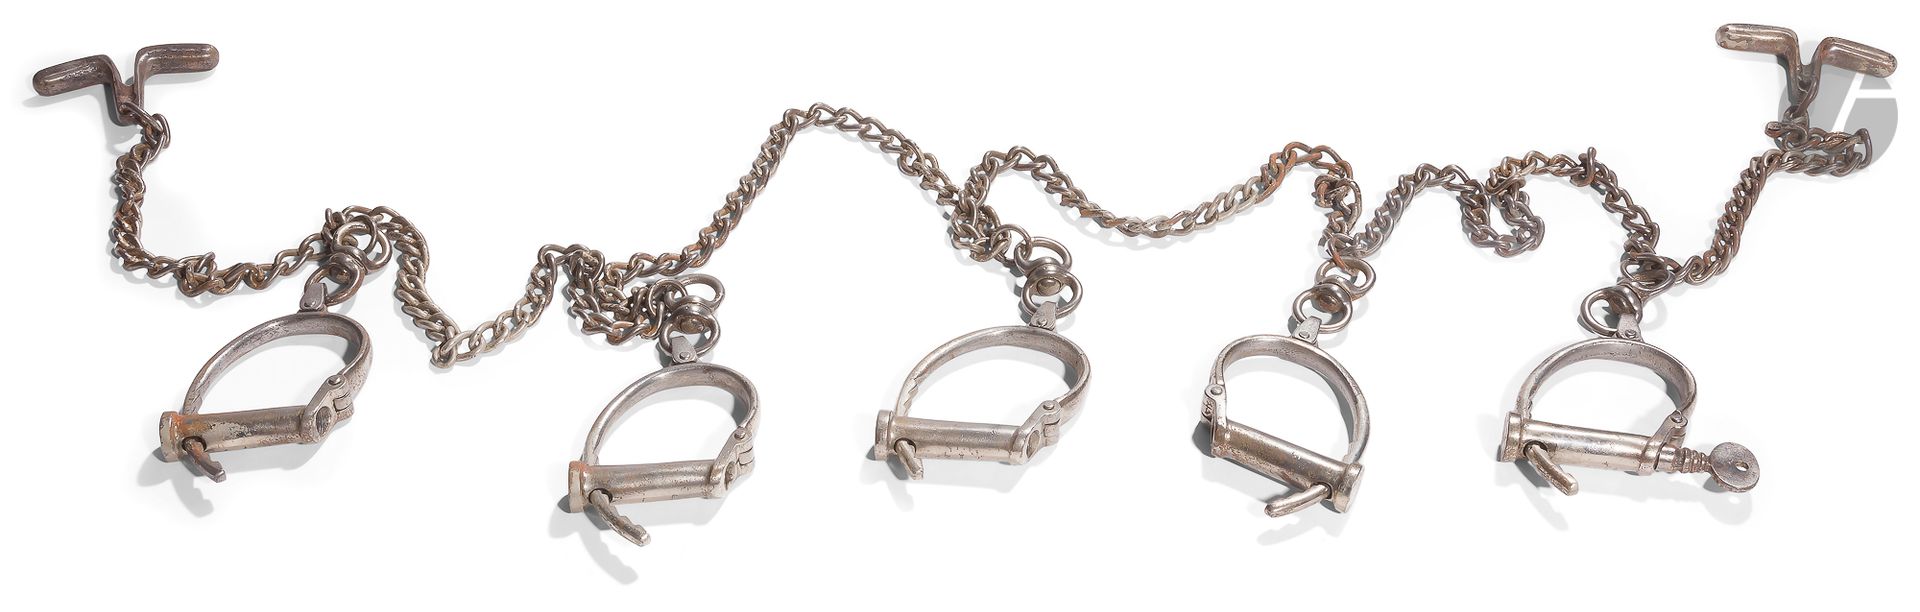 Null 用于转移囚犯的手铐
长链，两端有两个铁架，装有五个螺旋钥匙手铐，每隔43厘米一组。
总长度：224厘米B
.E. 20世纪。